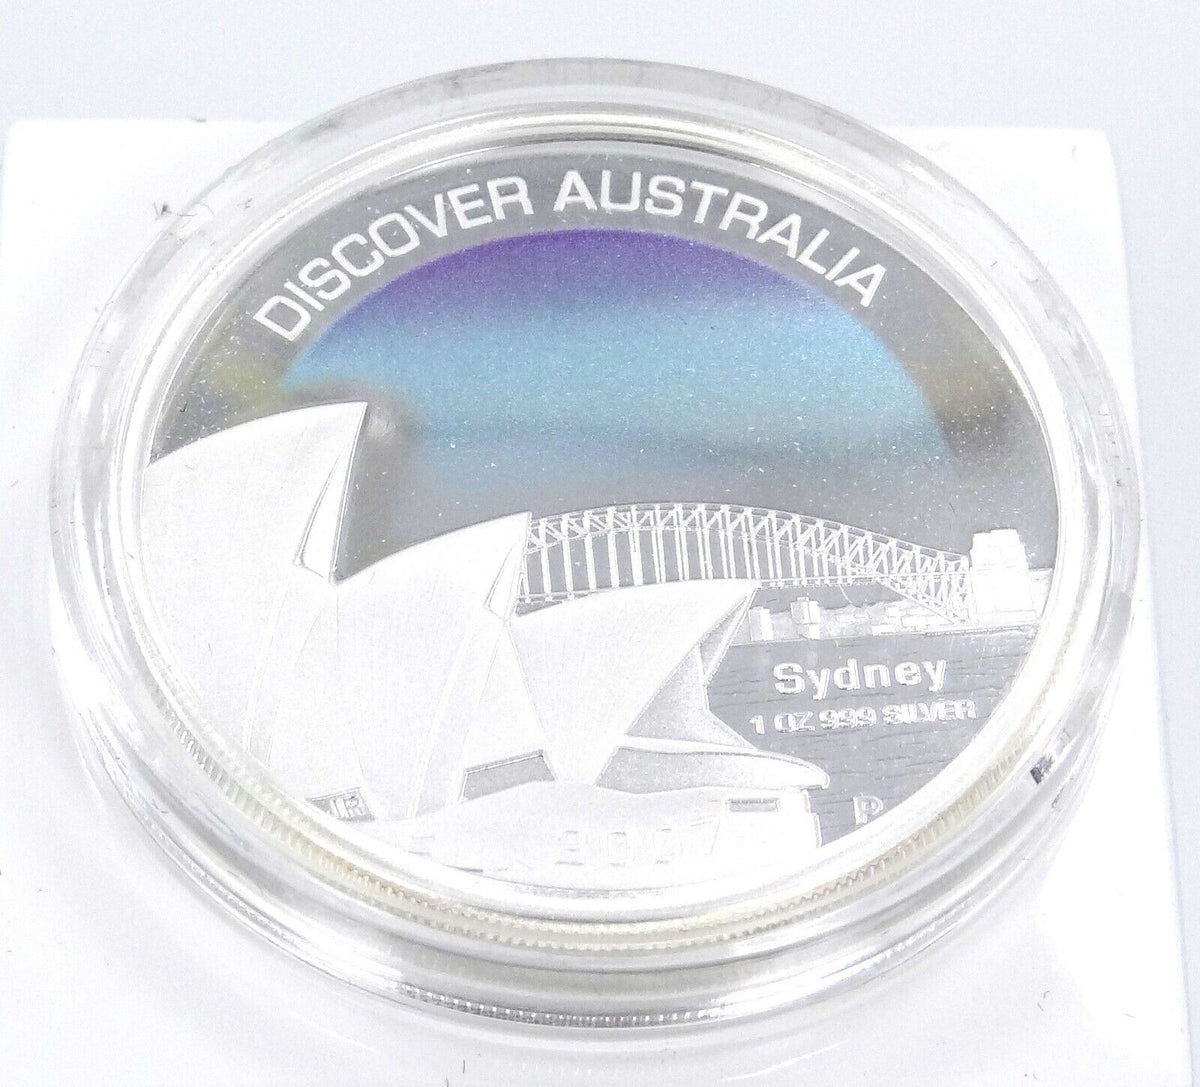 1 Oz Silver Coin 2007 $1 Australia Discover Australia Proof Coin - Sydney-classypw.com-1